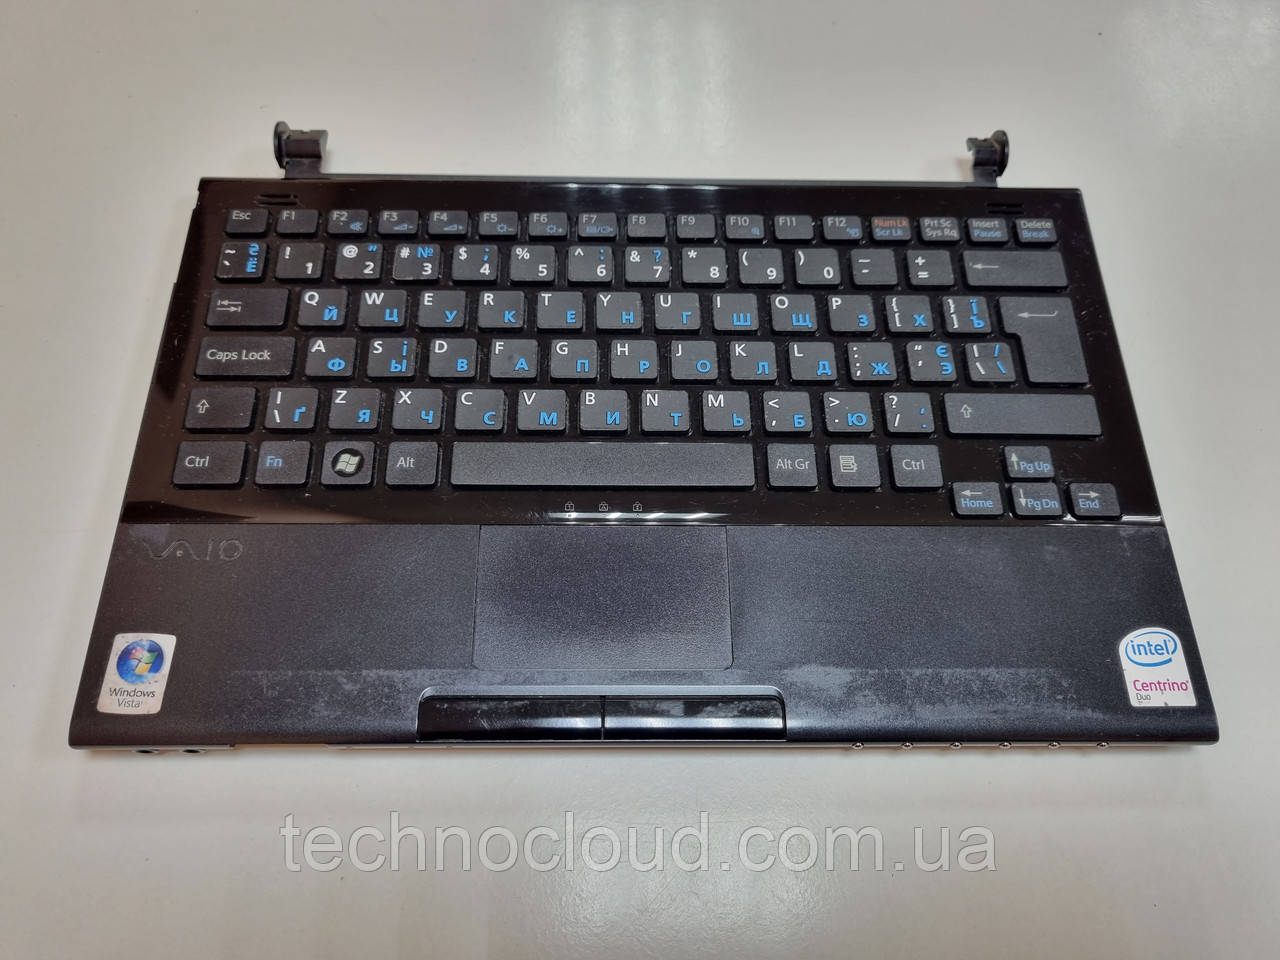 Середня частина корпусу ноутбука топ кейс Palmrest Sony Vaio VGN-TZ2, VGN-TZ20WN